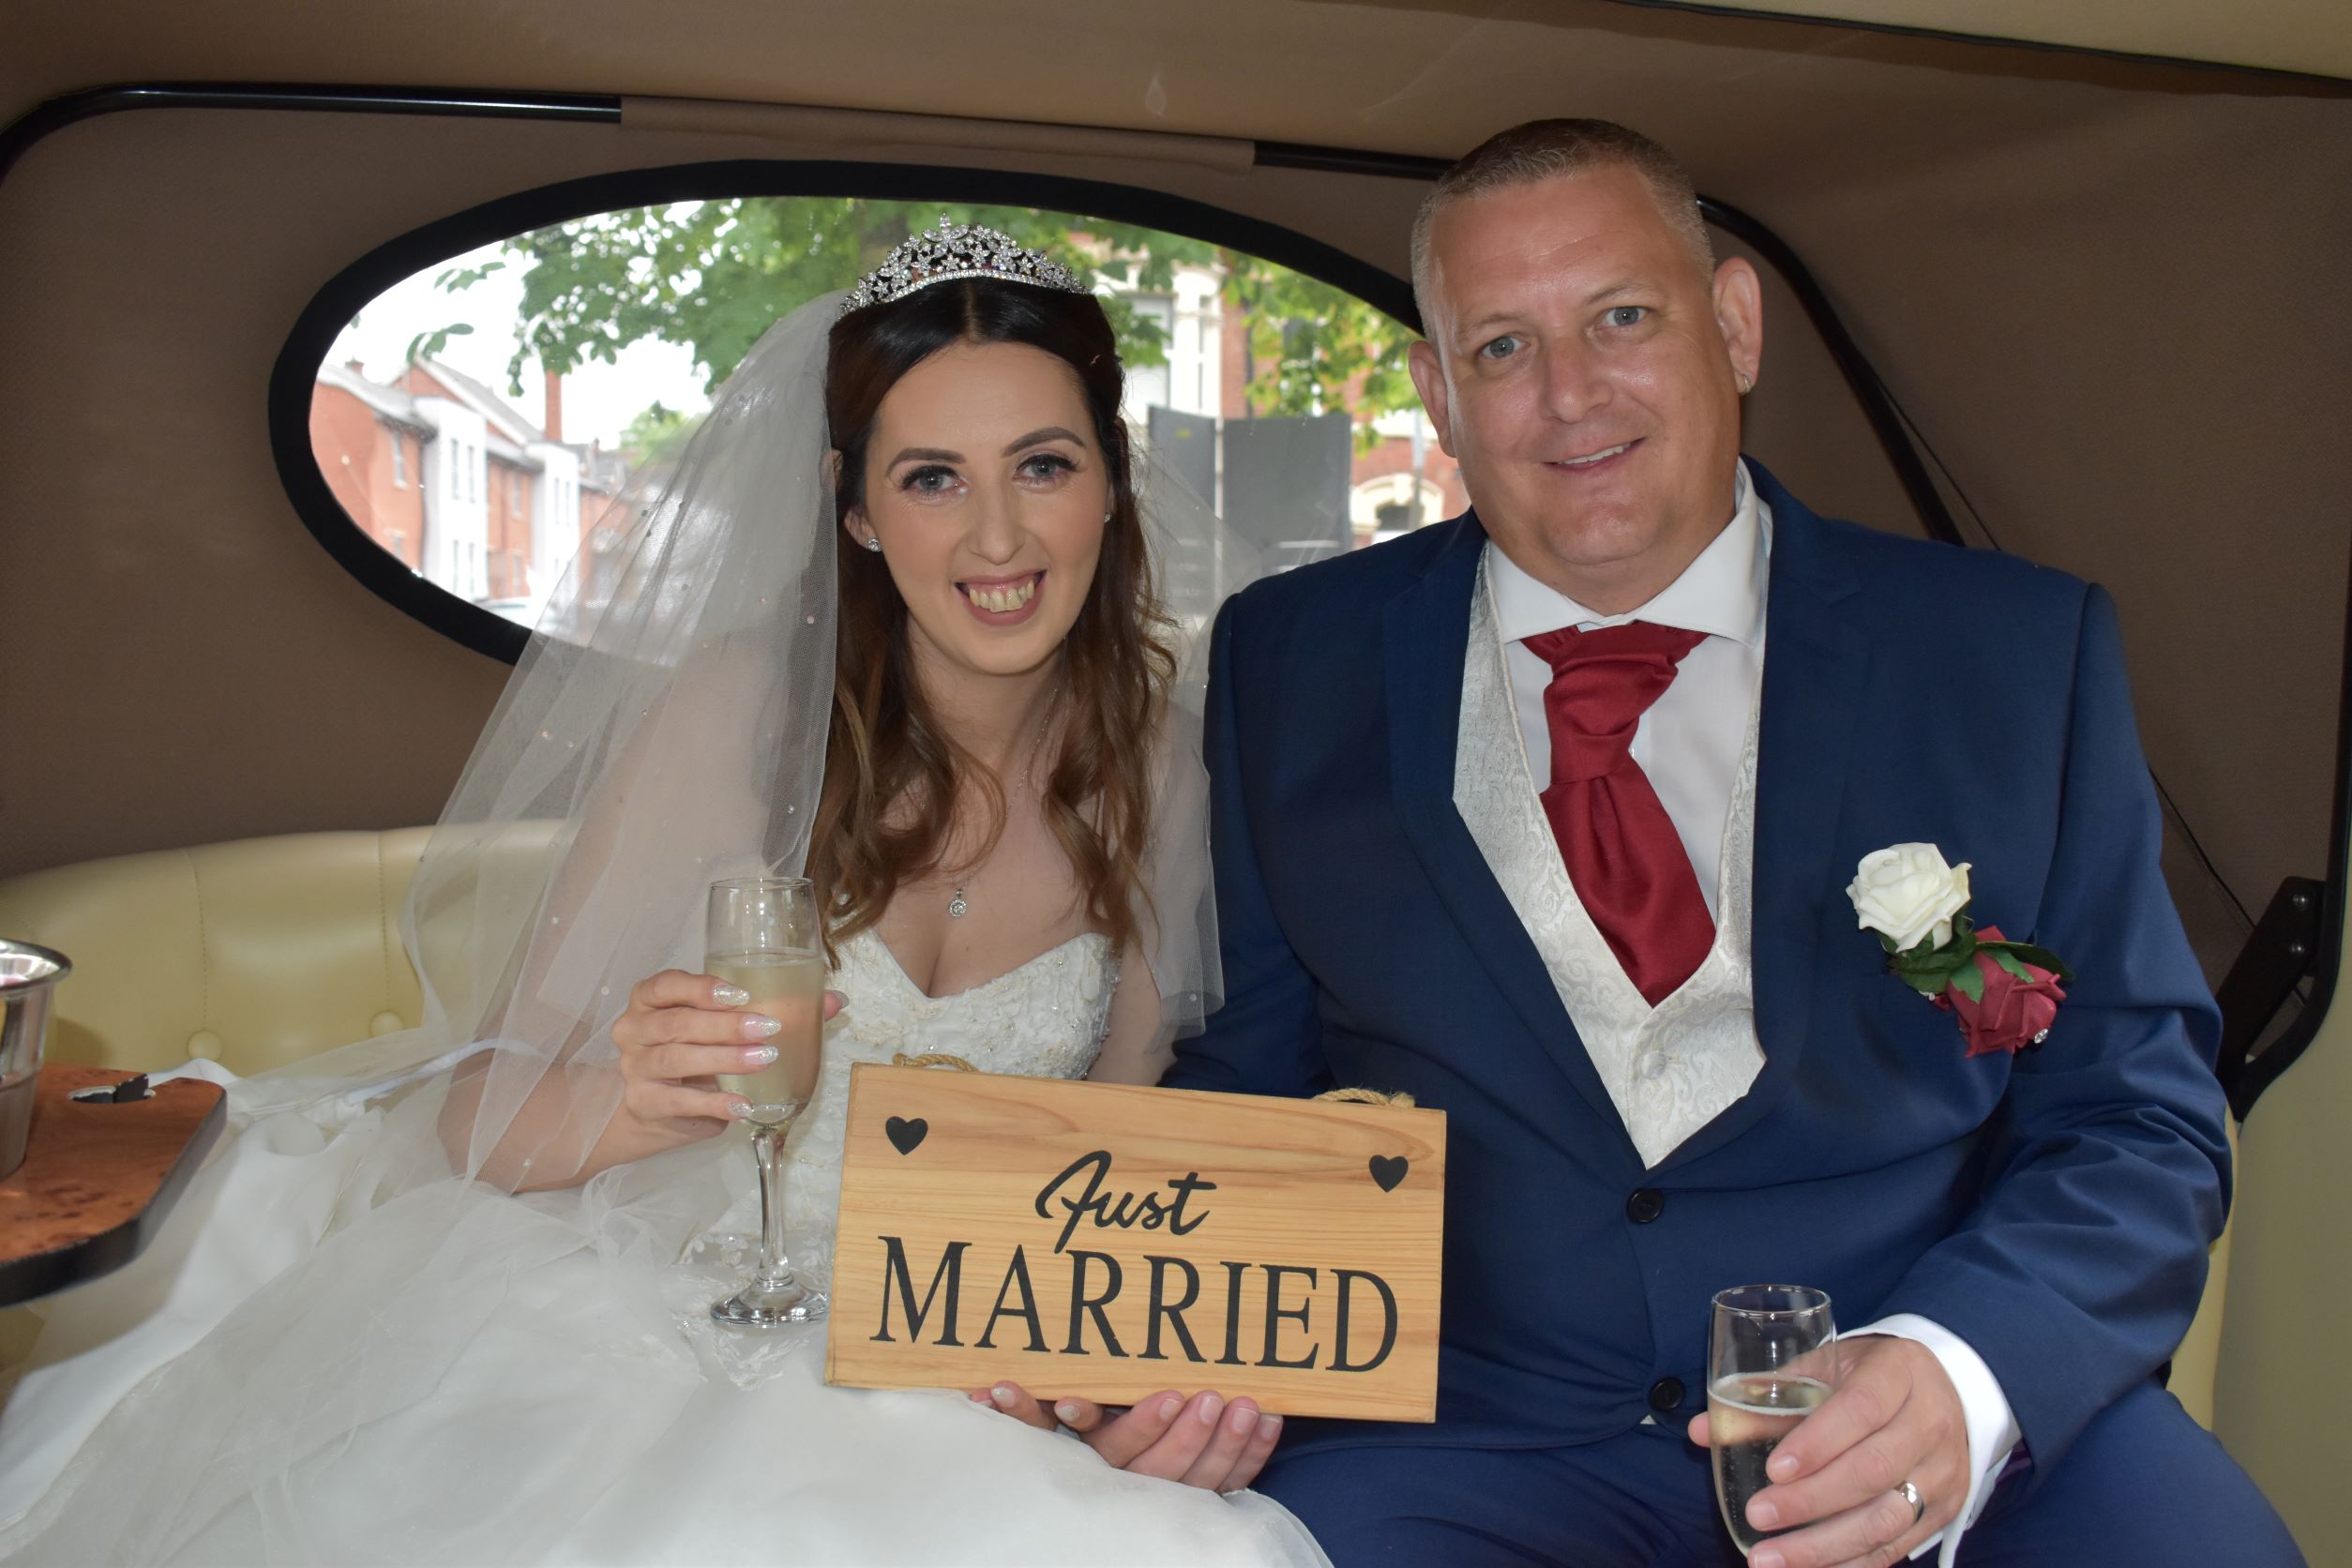 Swindon Marriott Hotel wedding reception for Darren and Abigail